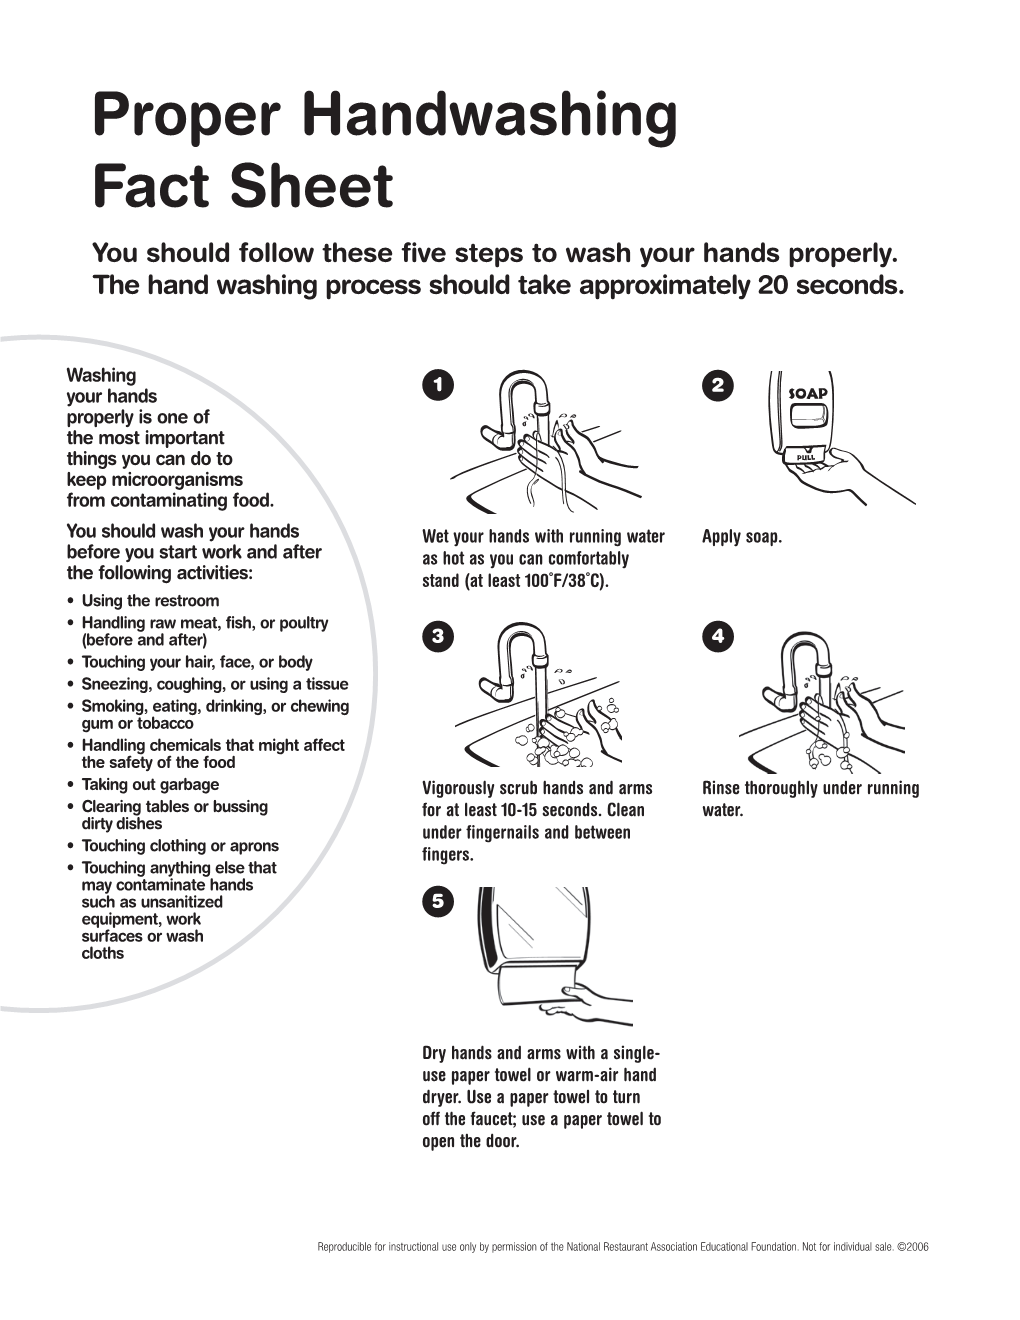 Proper Handwashing Fact Sheet You Should Follow These Five Steps to Wash Your Hands Properly